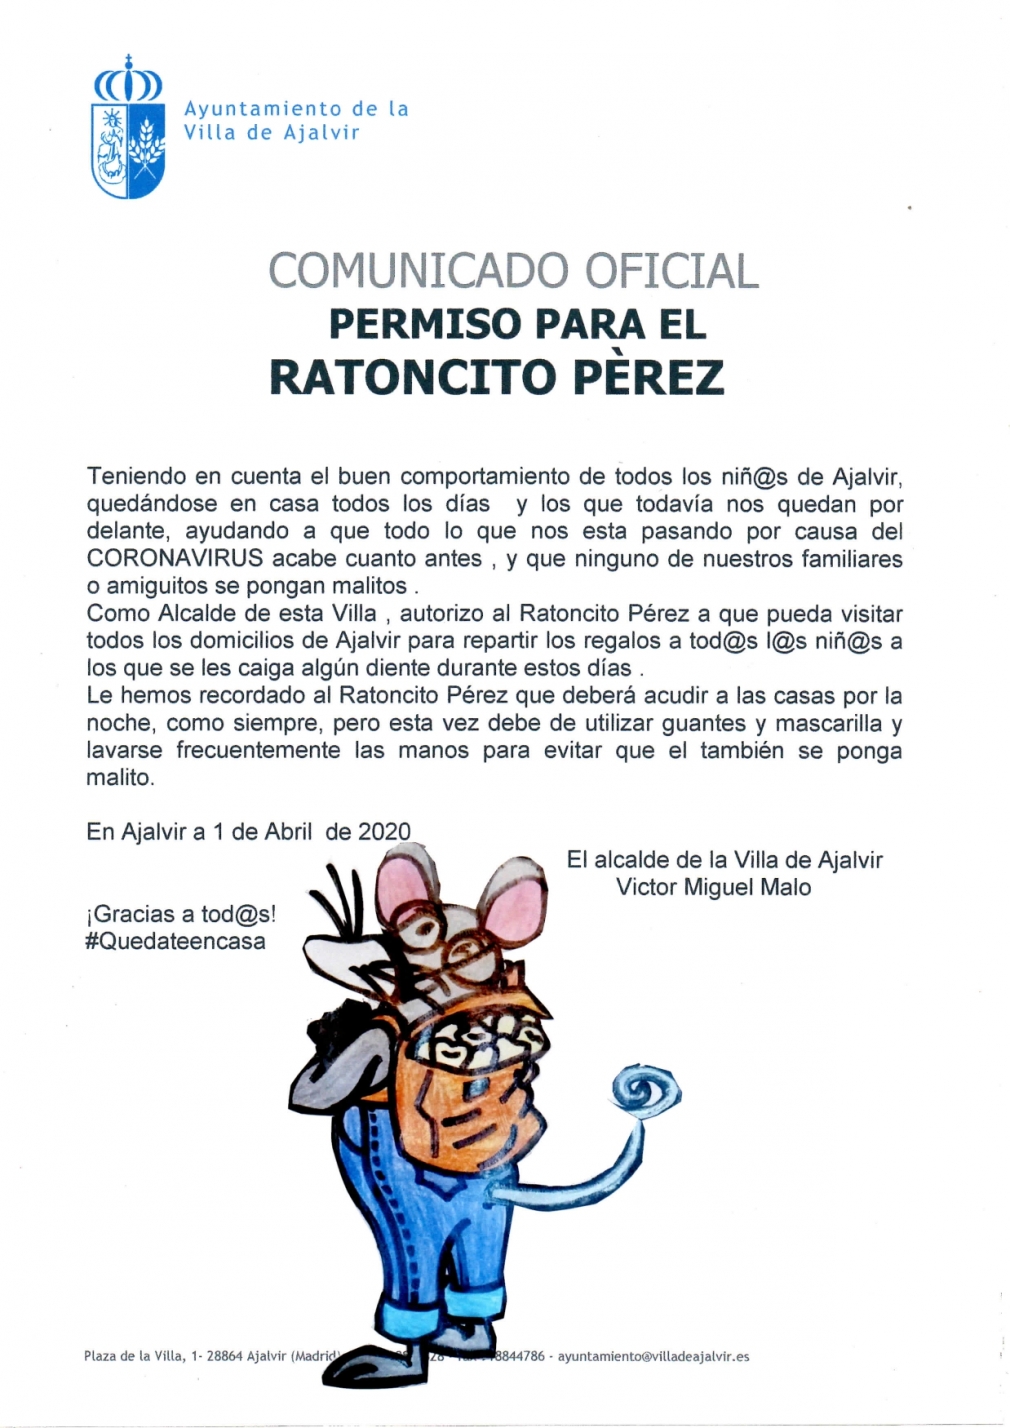 RECOGIDA DE DIENTES DEL RATONCITO PEREZ